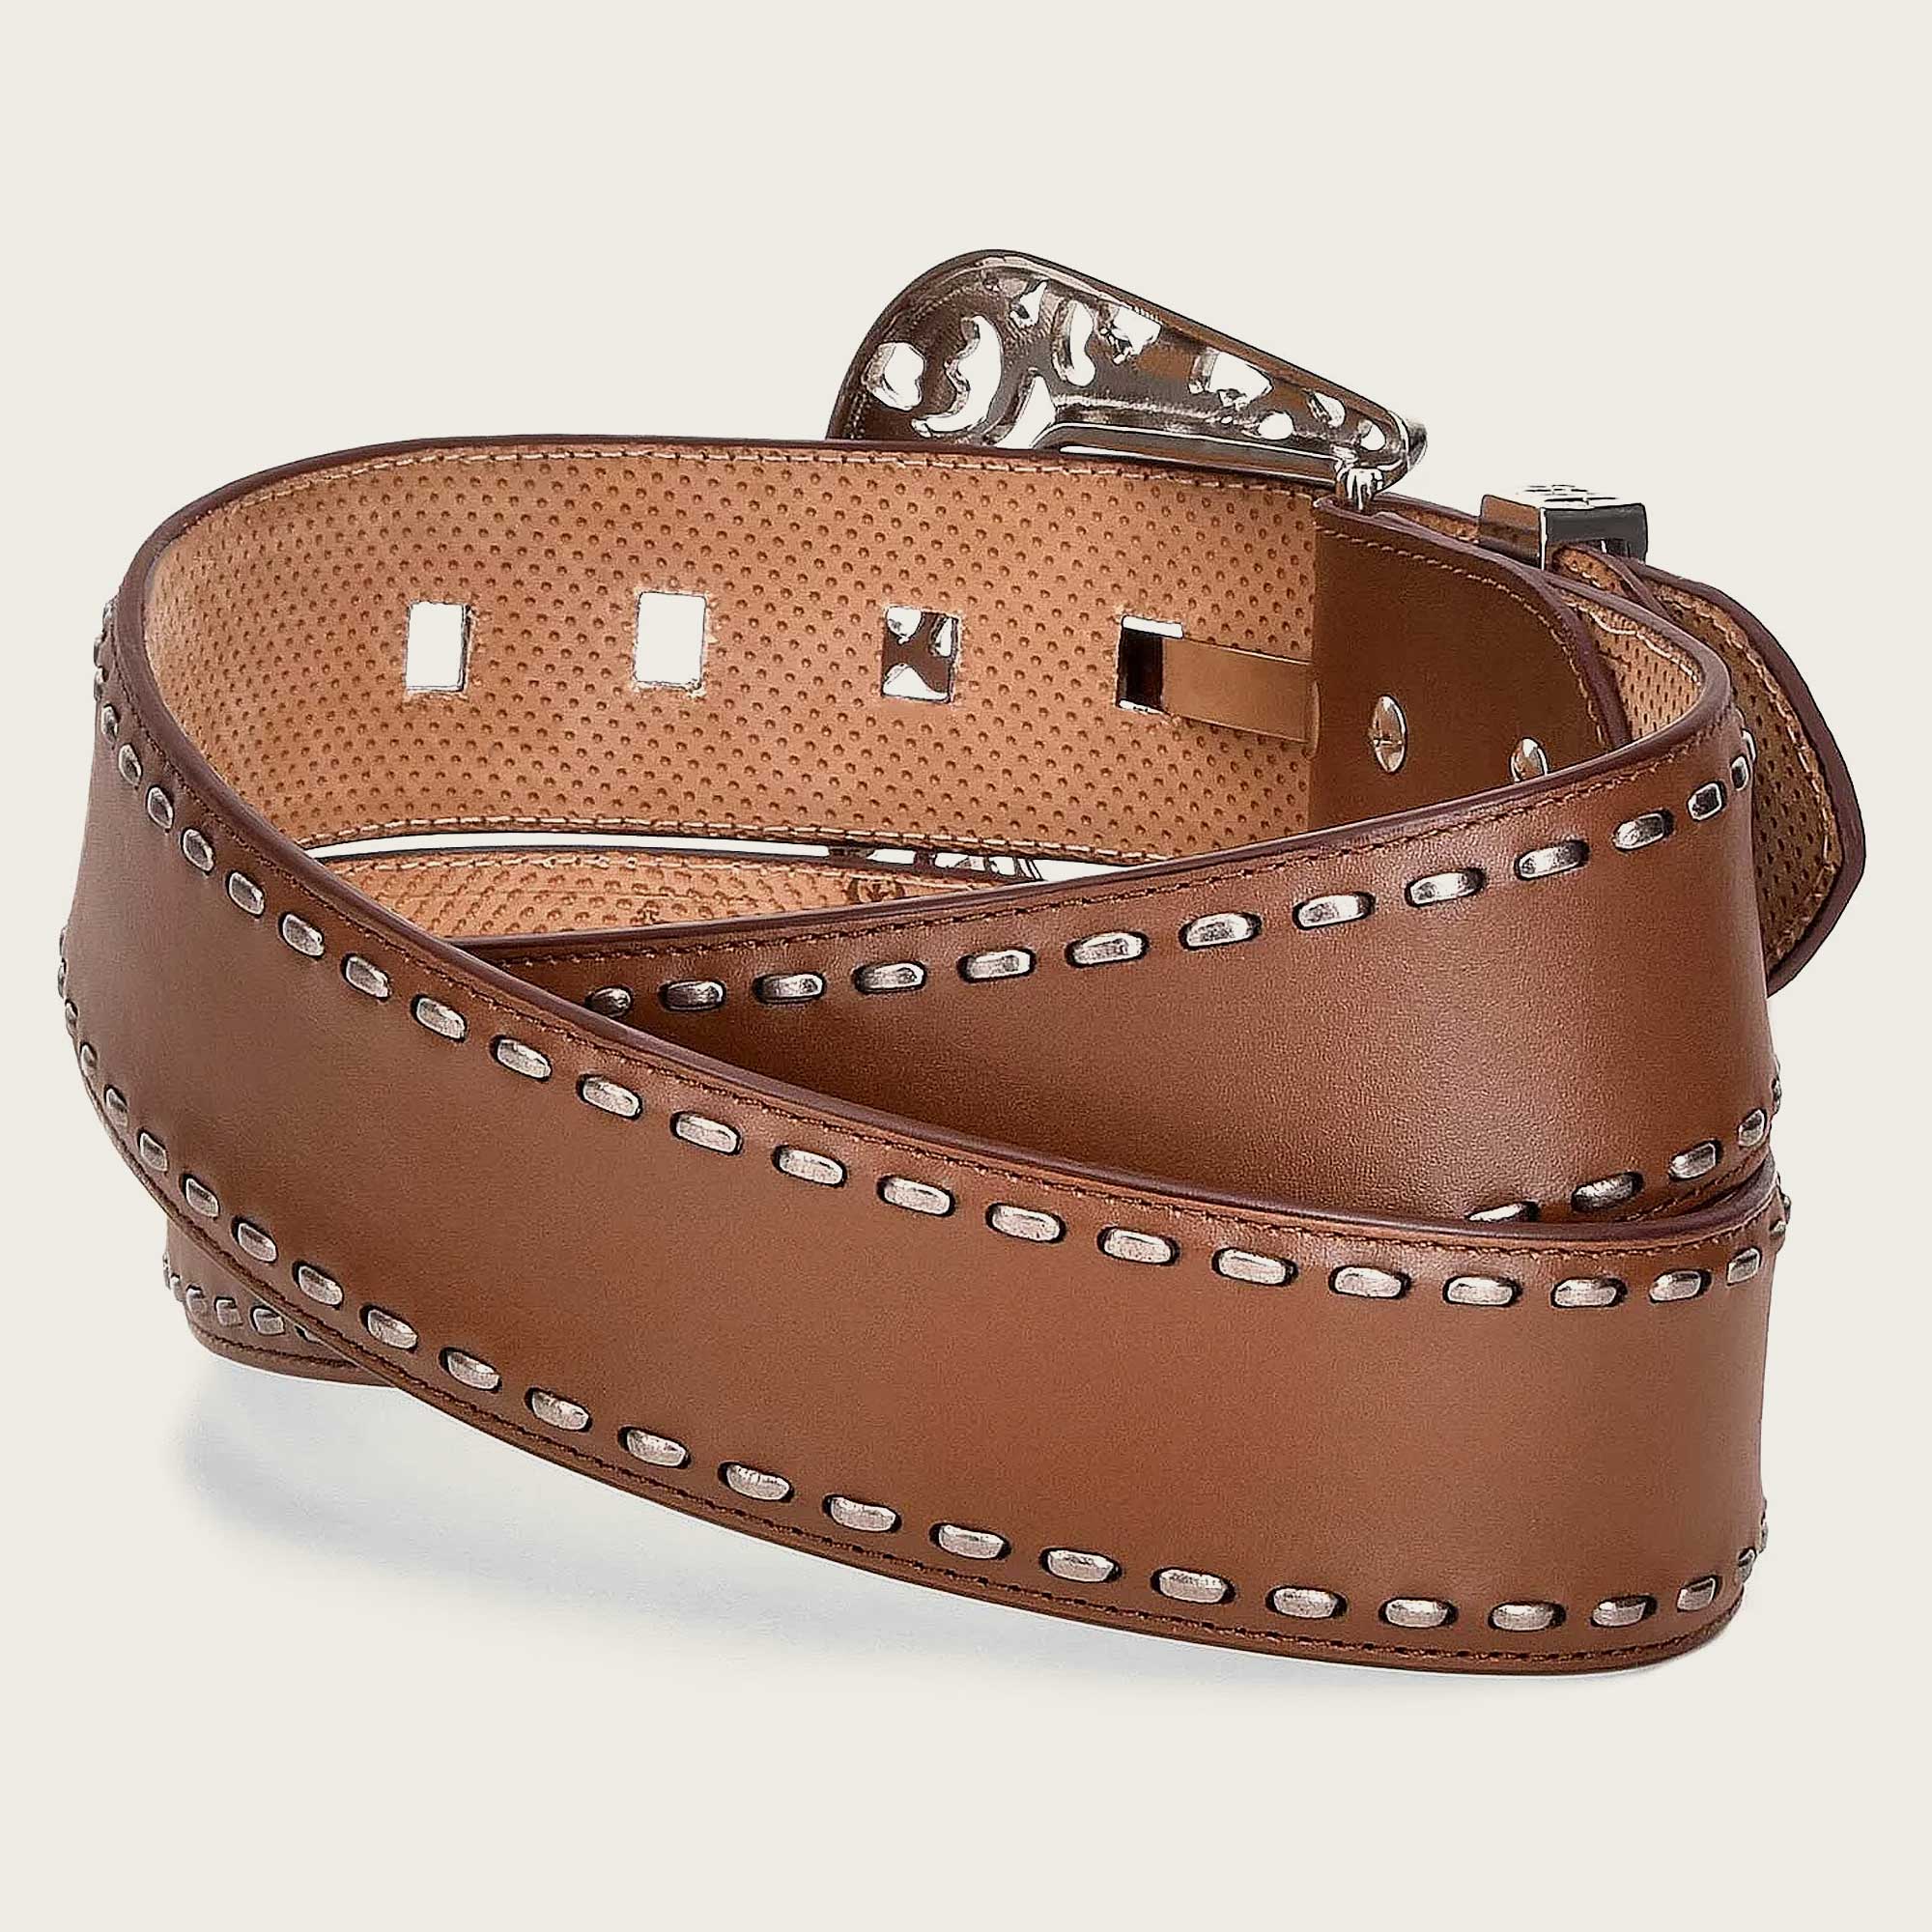 Handwoven honey leather belt with metallic buckle